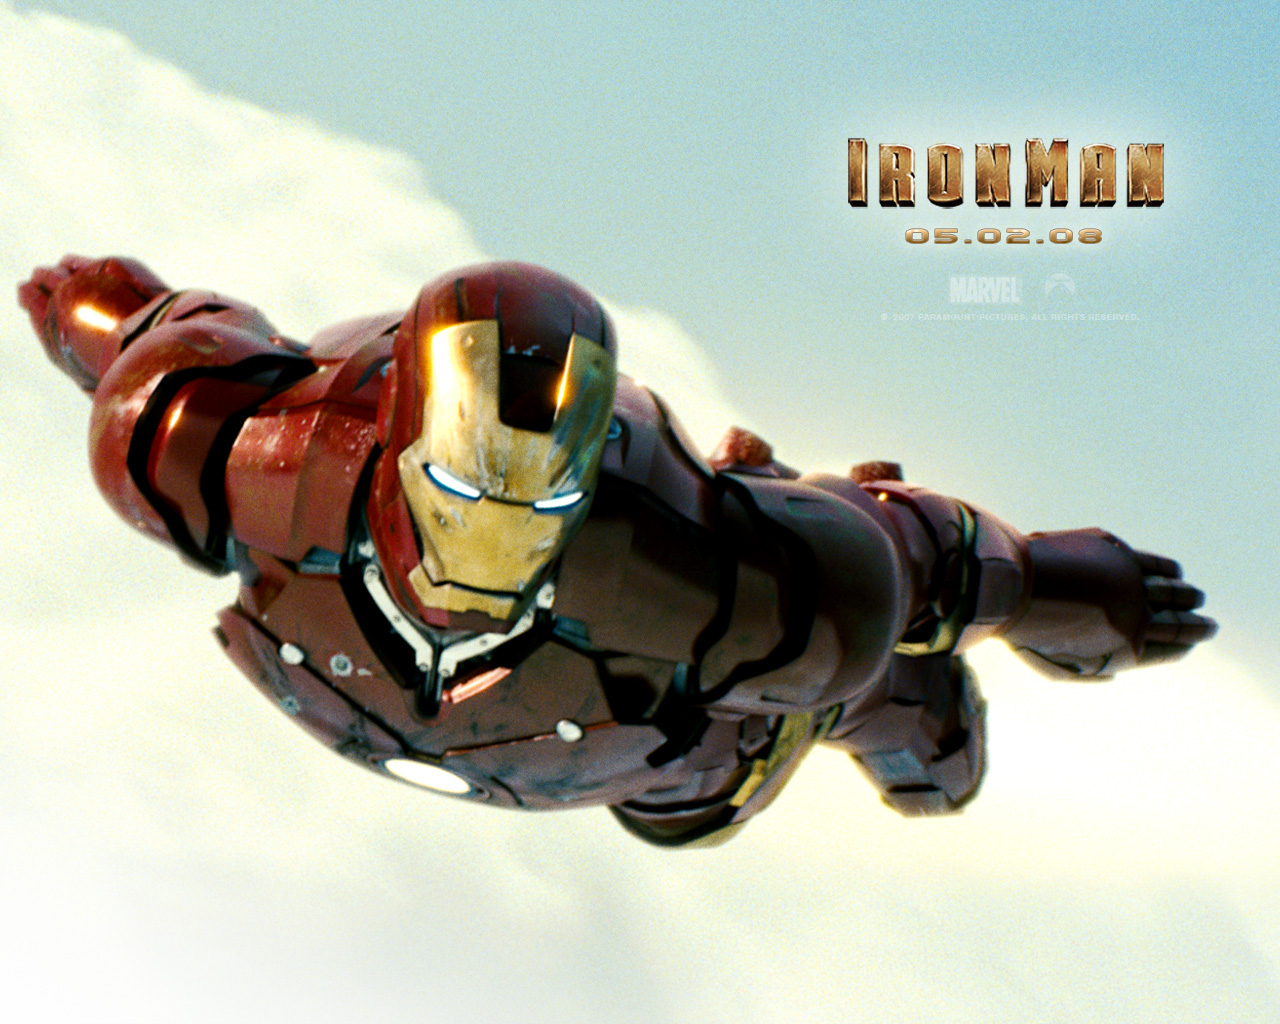 Download High quality Iron Man wallpaper / Movies / 1280x1024